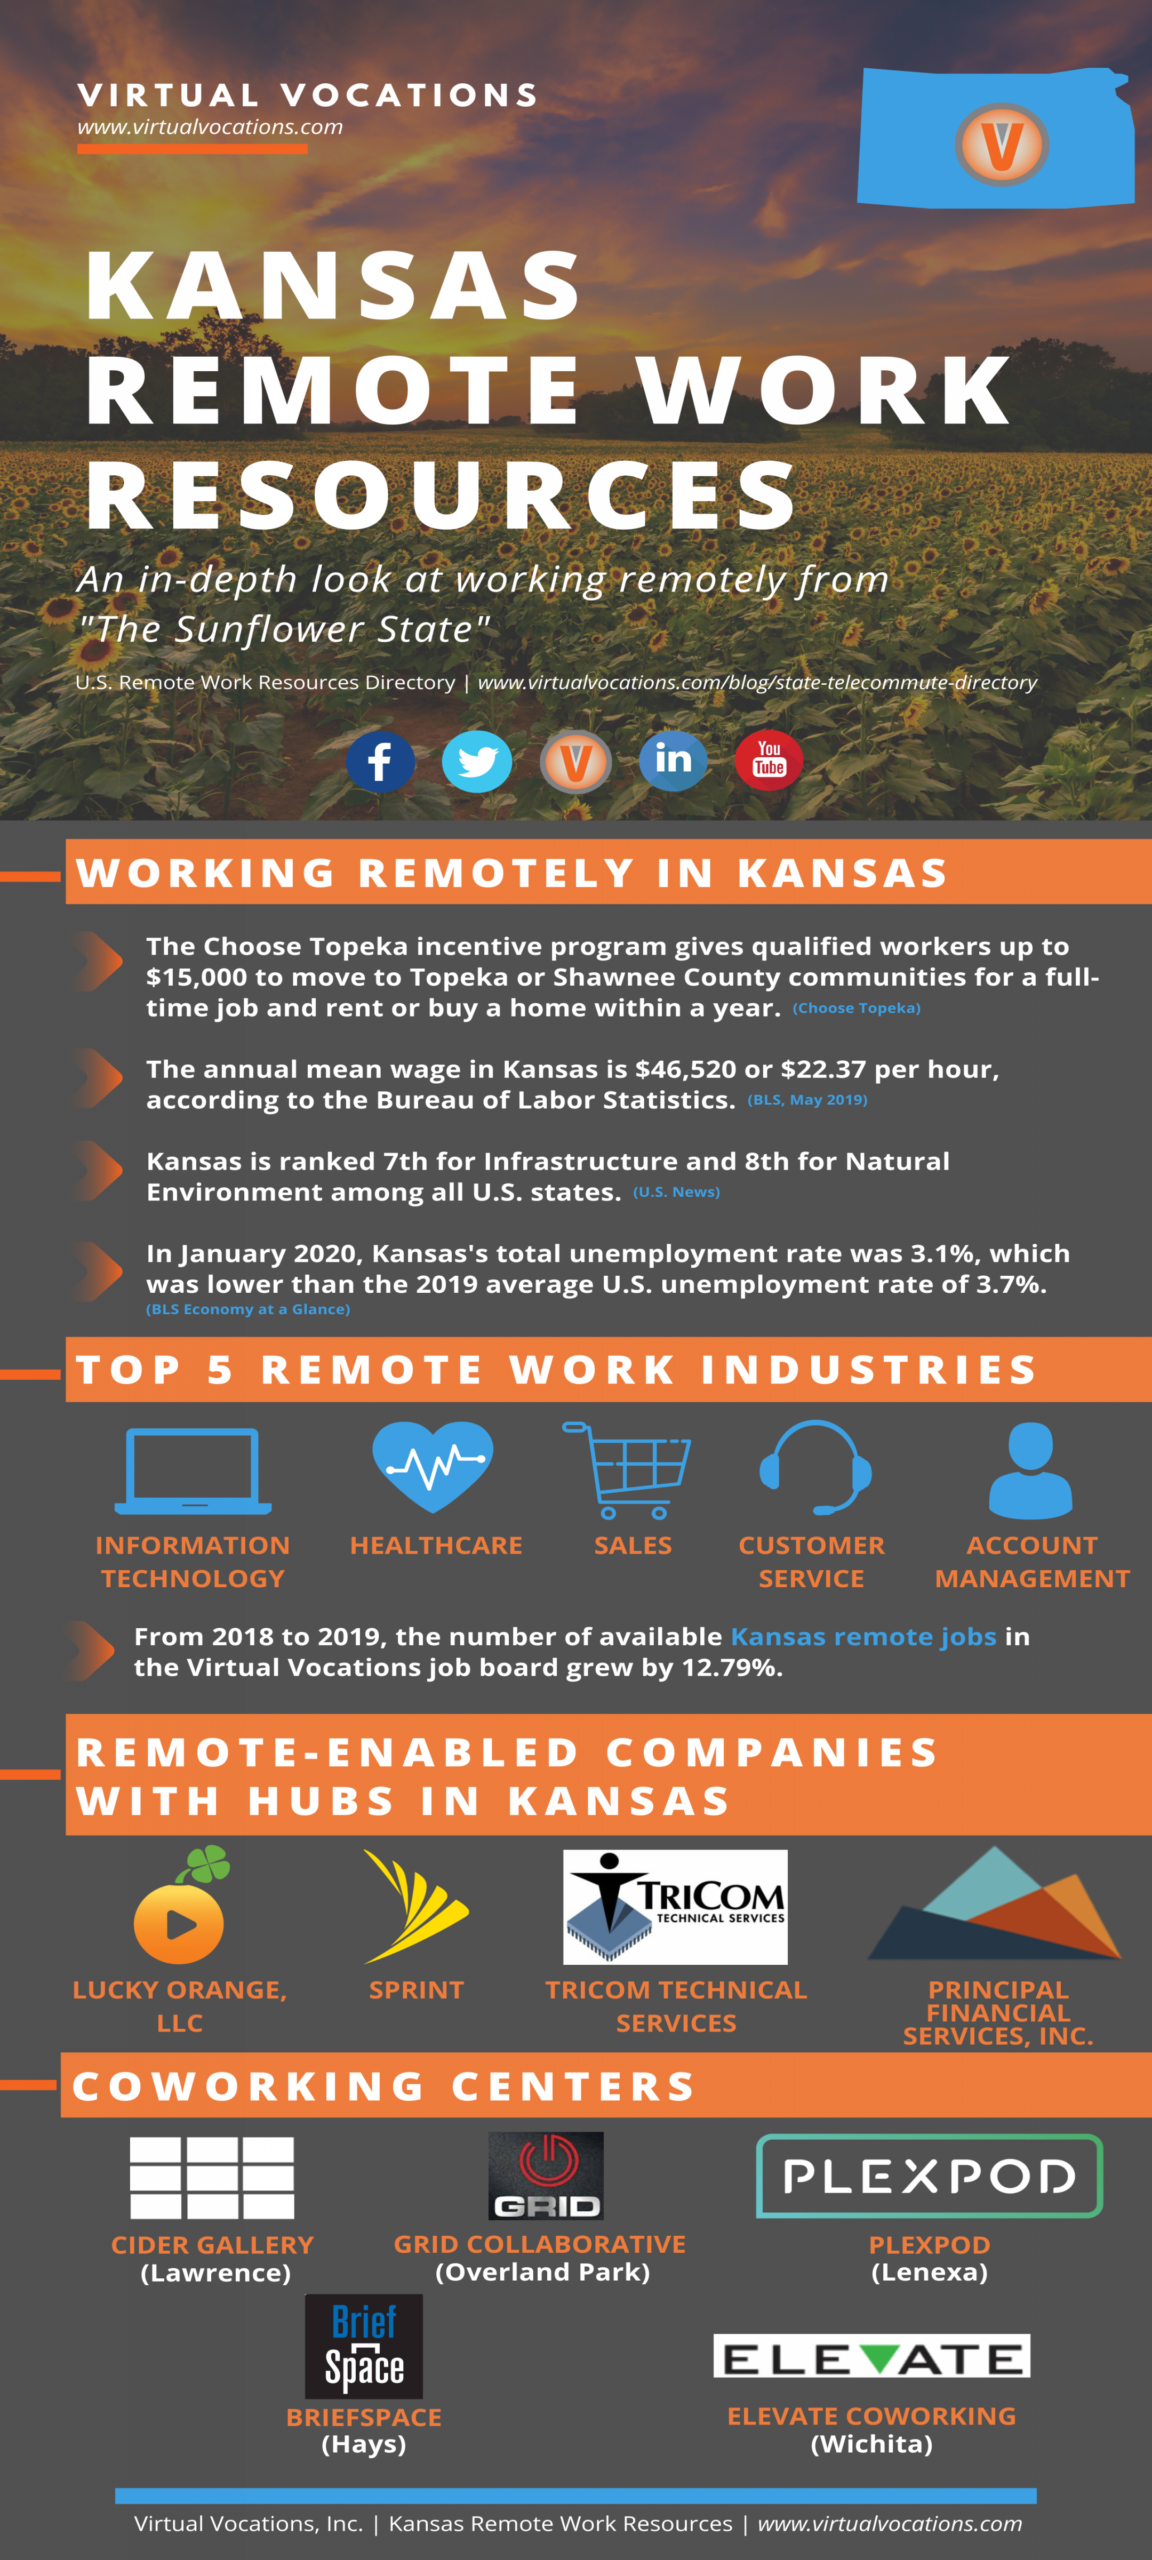 Kansas Remote Work Resources - Virtual Vocations